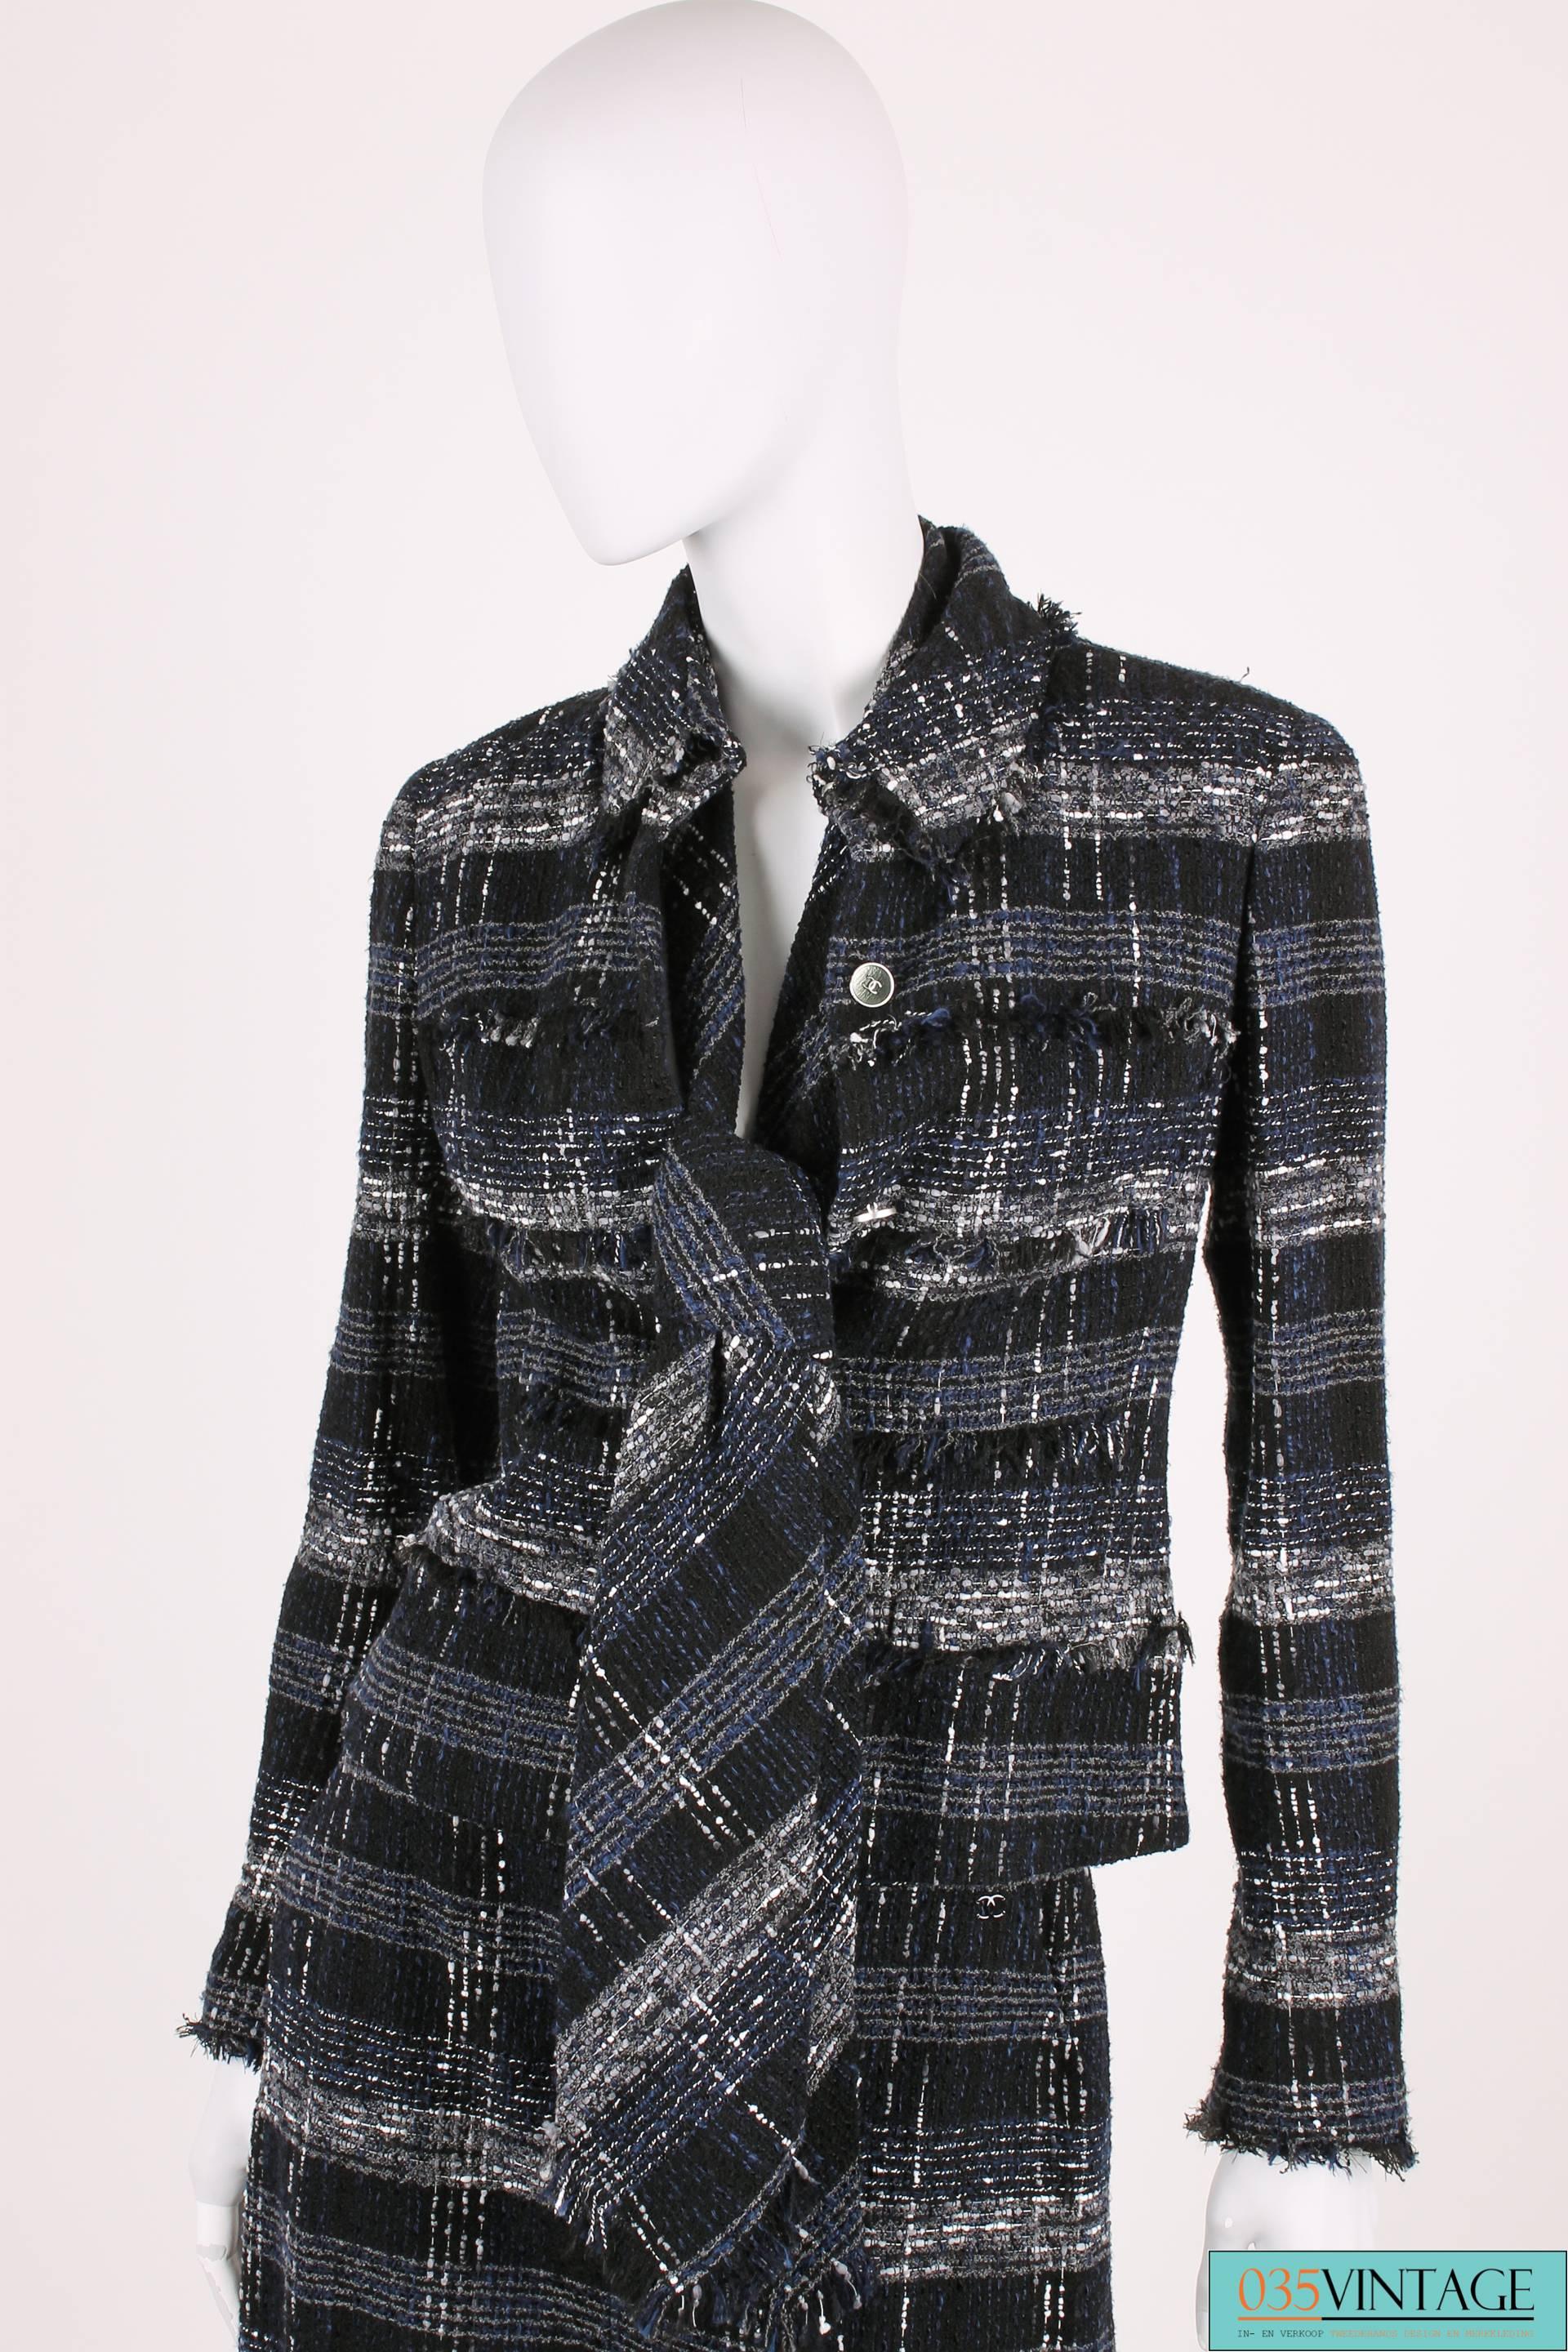 Chanel Suit 3-pcs Jacket, Skirt & Tie - dark blue/black/grey/white 1